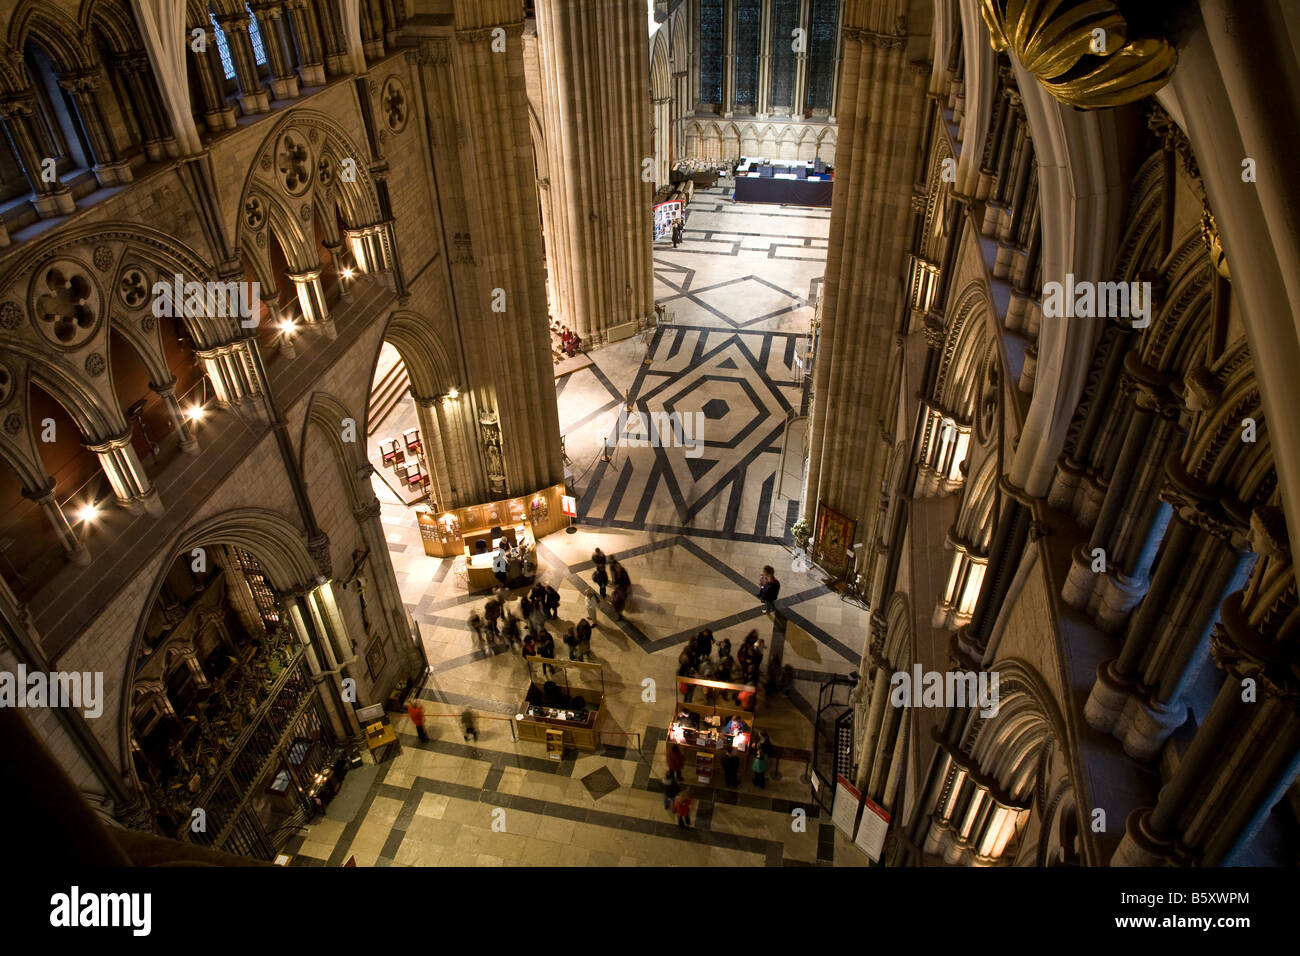 The restored South Transept of York Minster, York, England Stock Photo